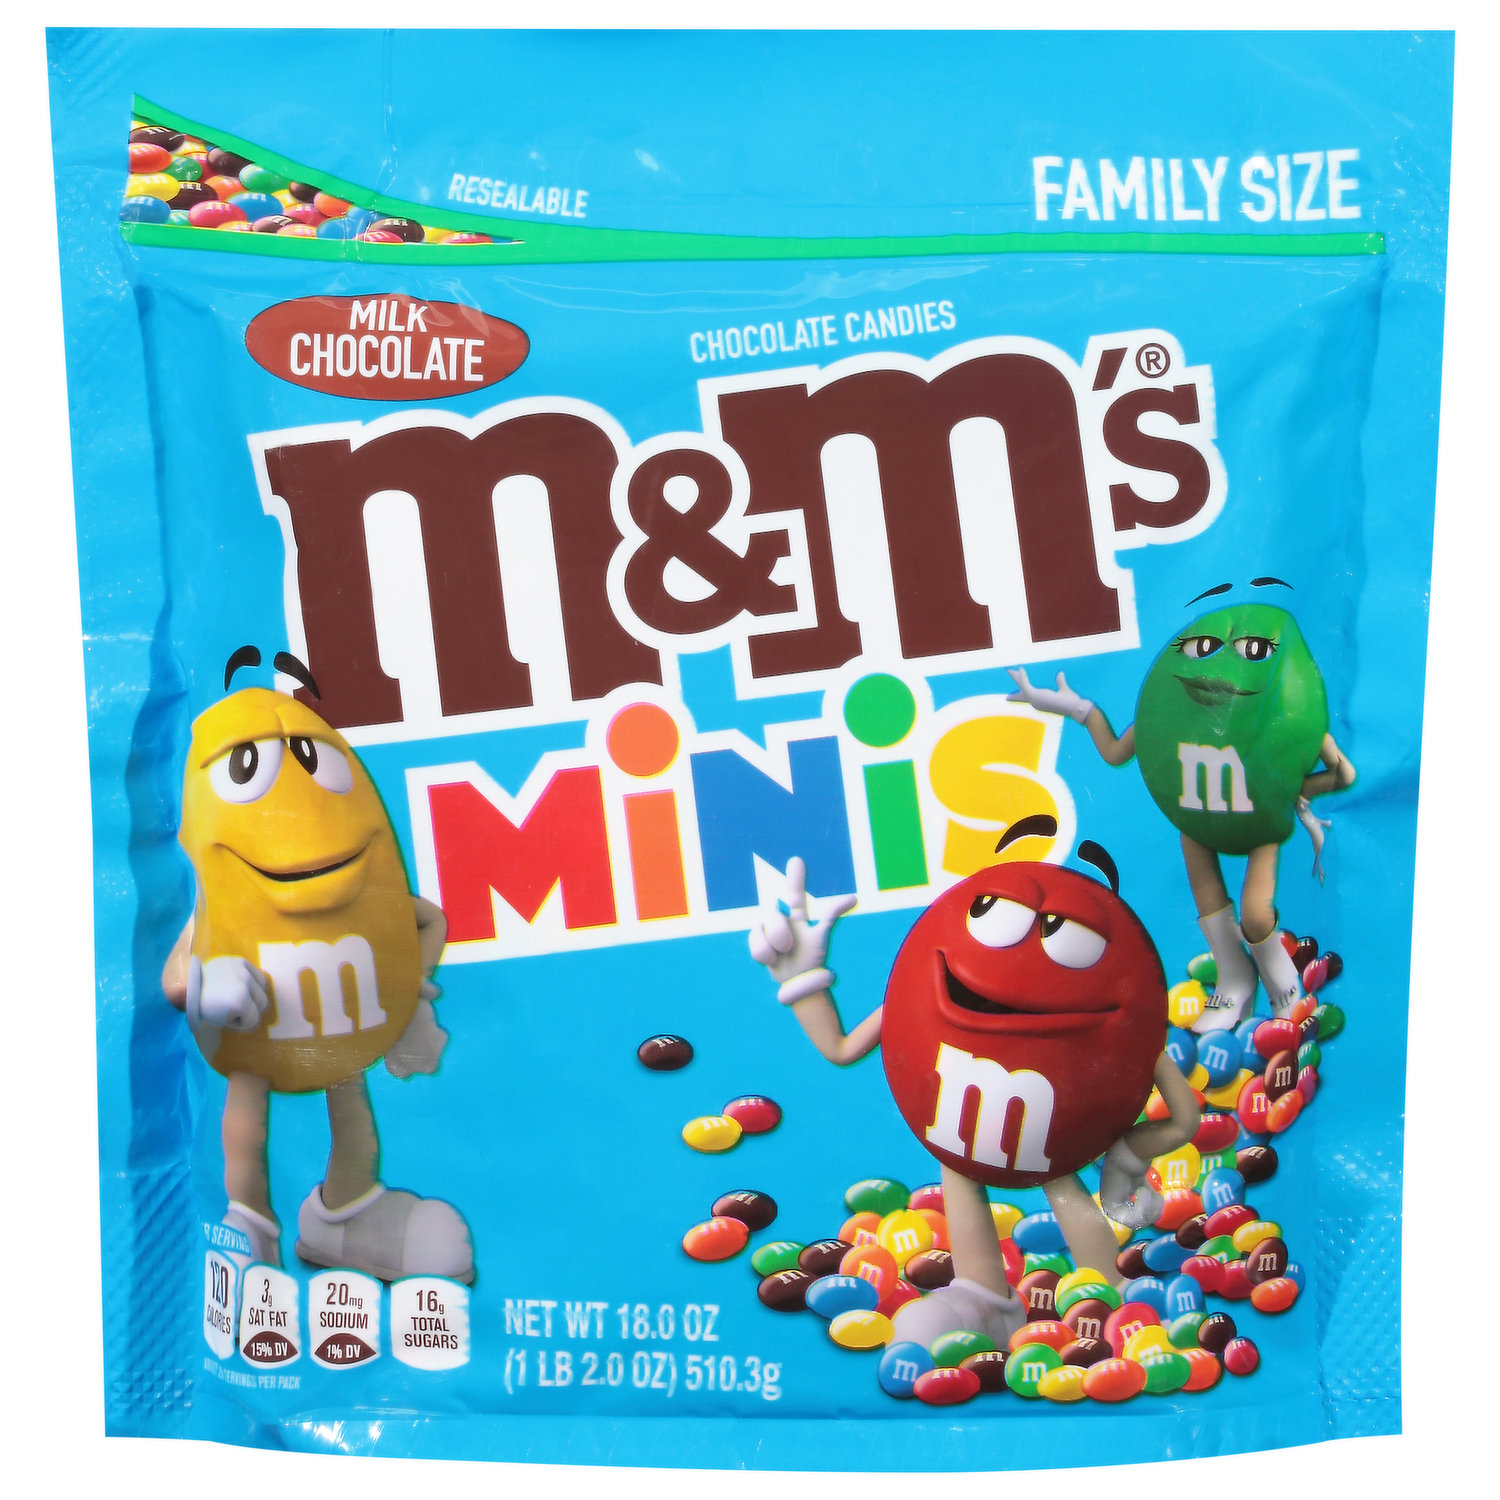 M&M's Chocolate Candies, Milk Chocolate, Minis, Family Size